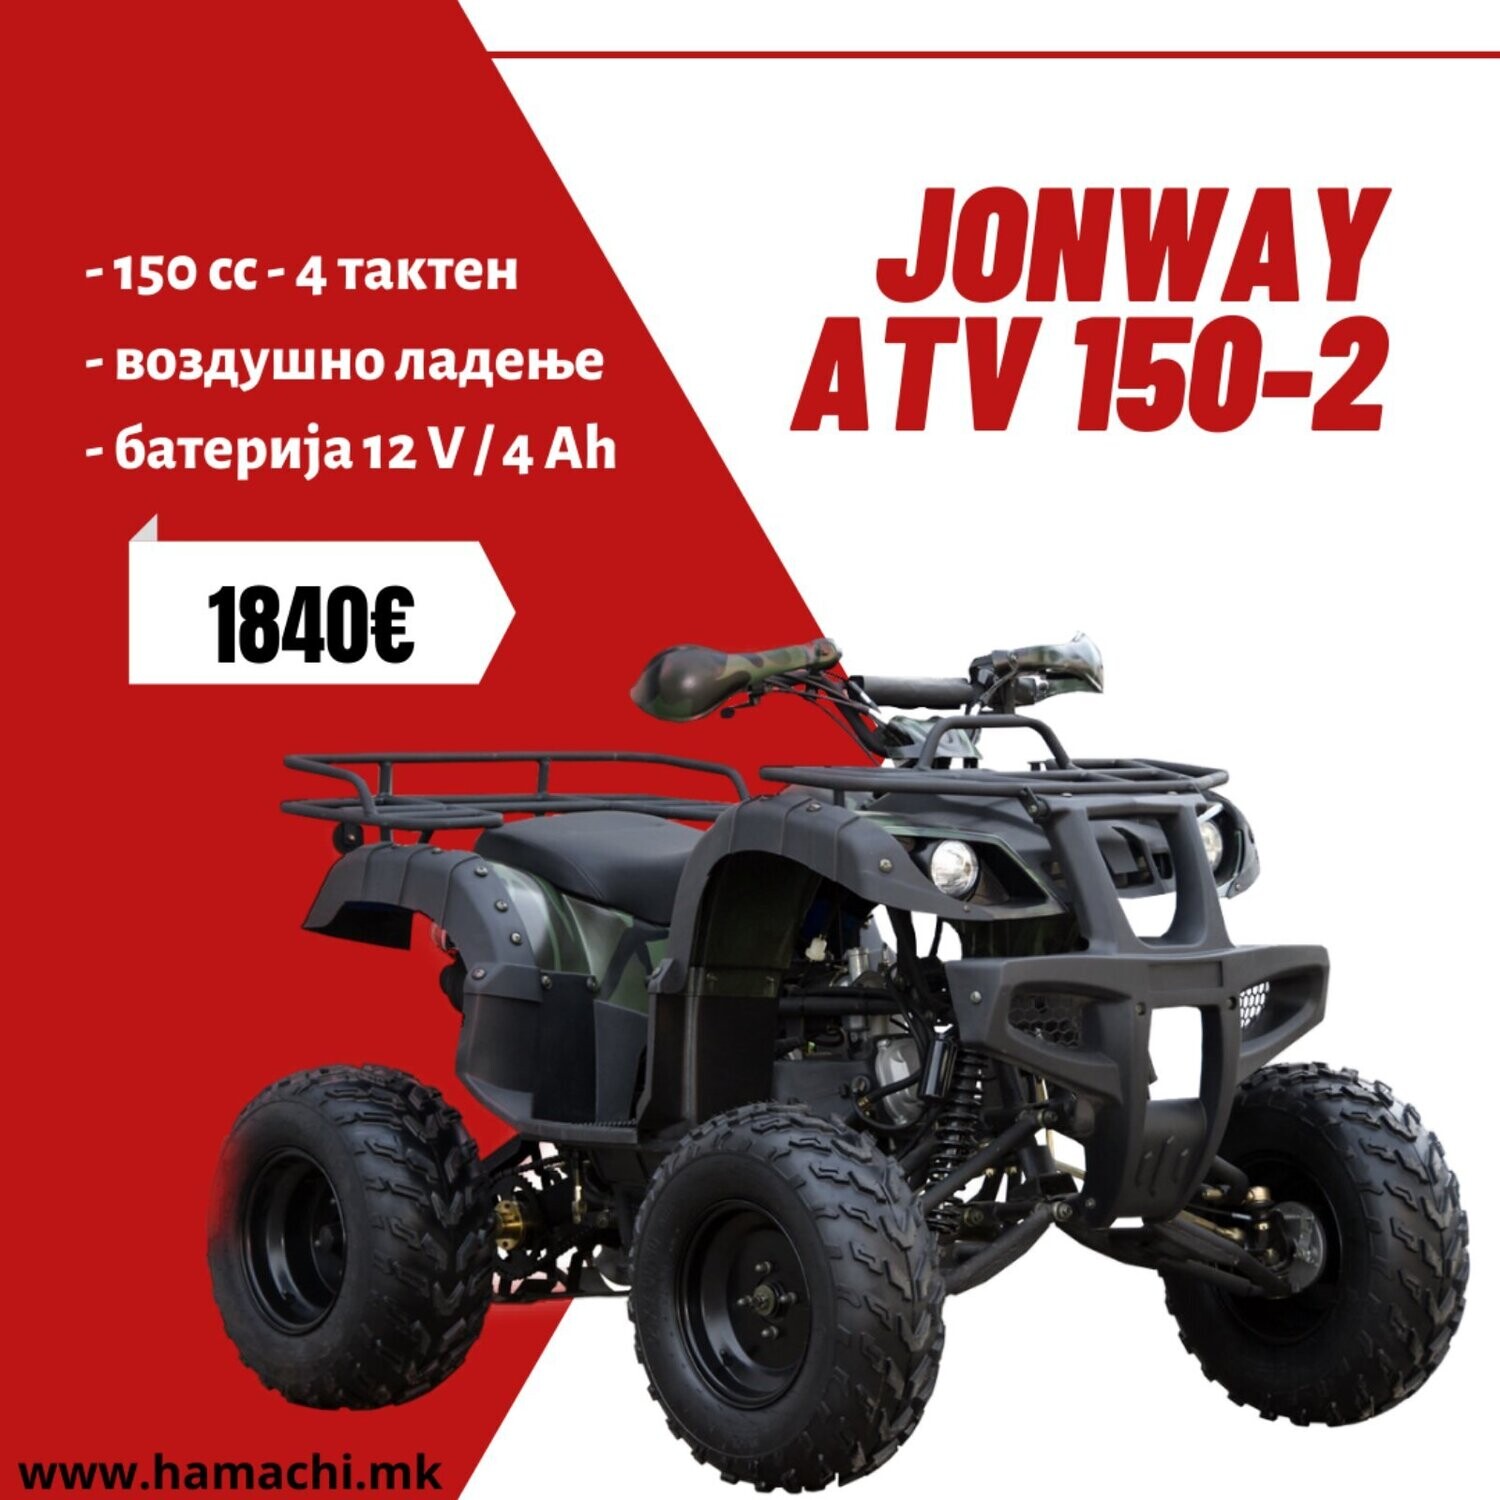 JONWAY ATV 150-2